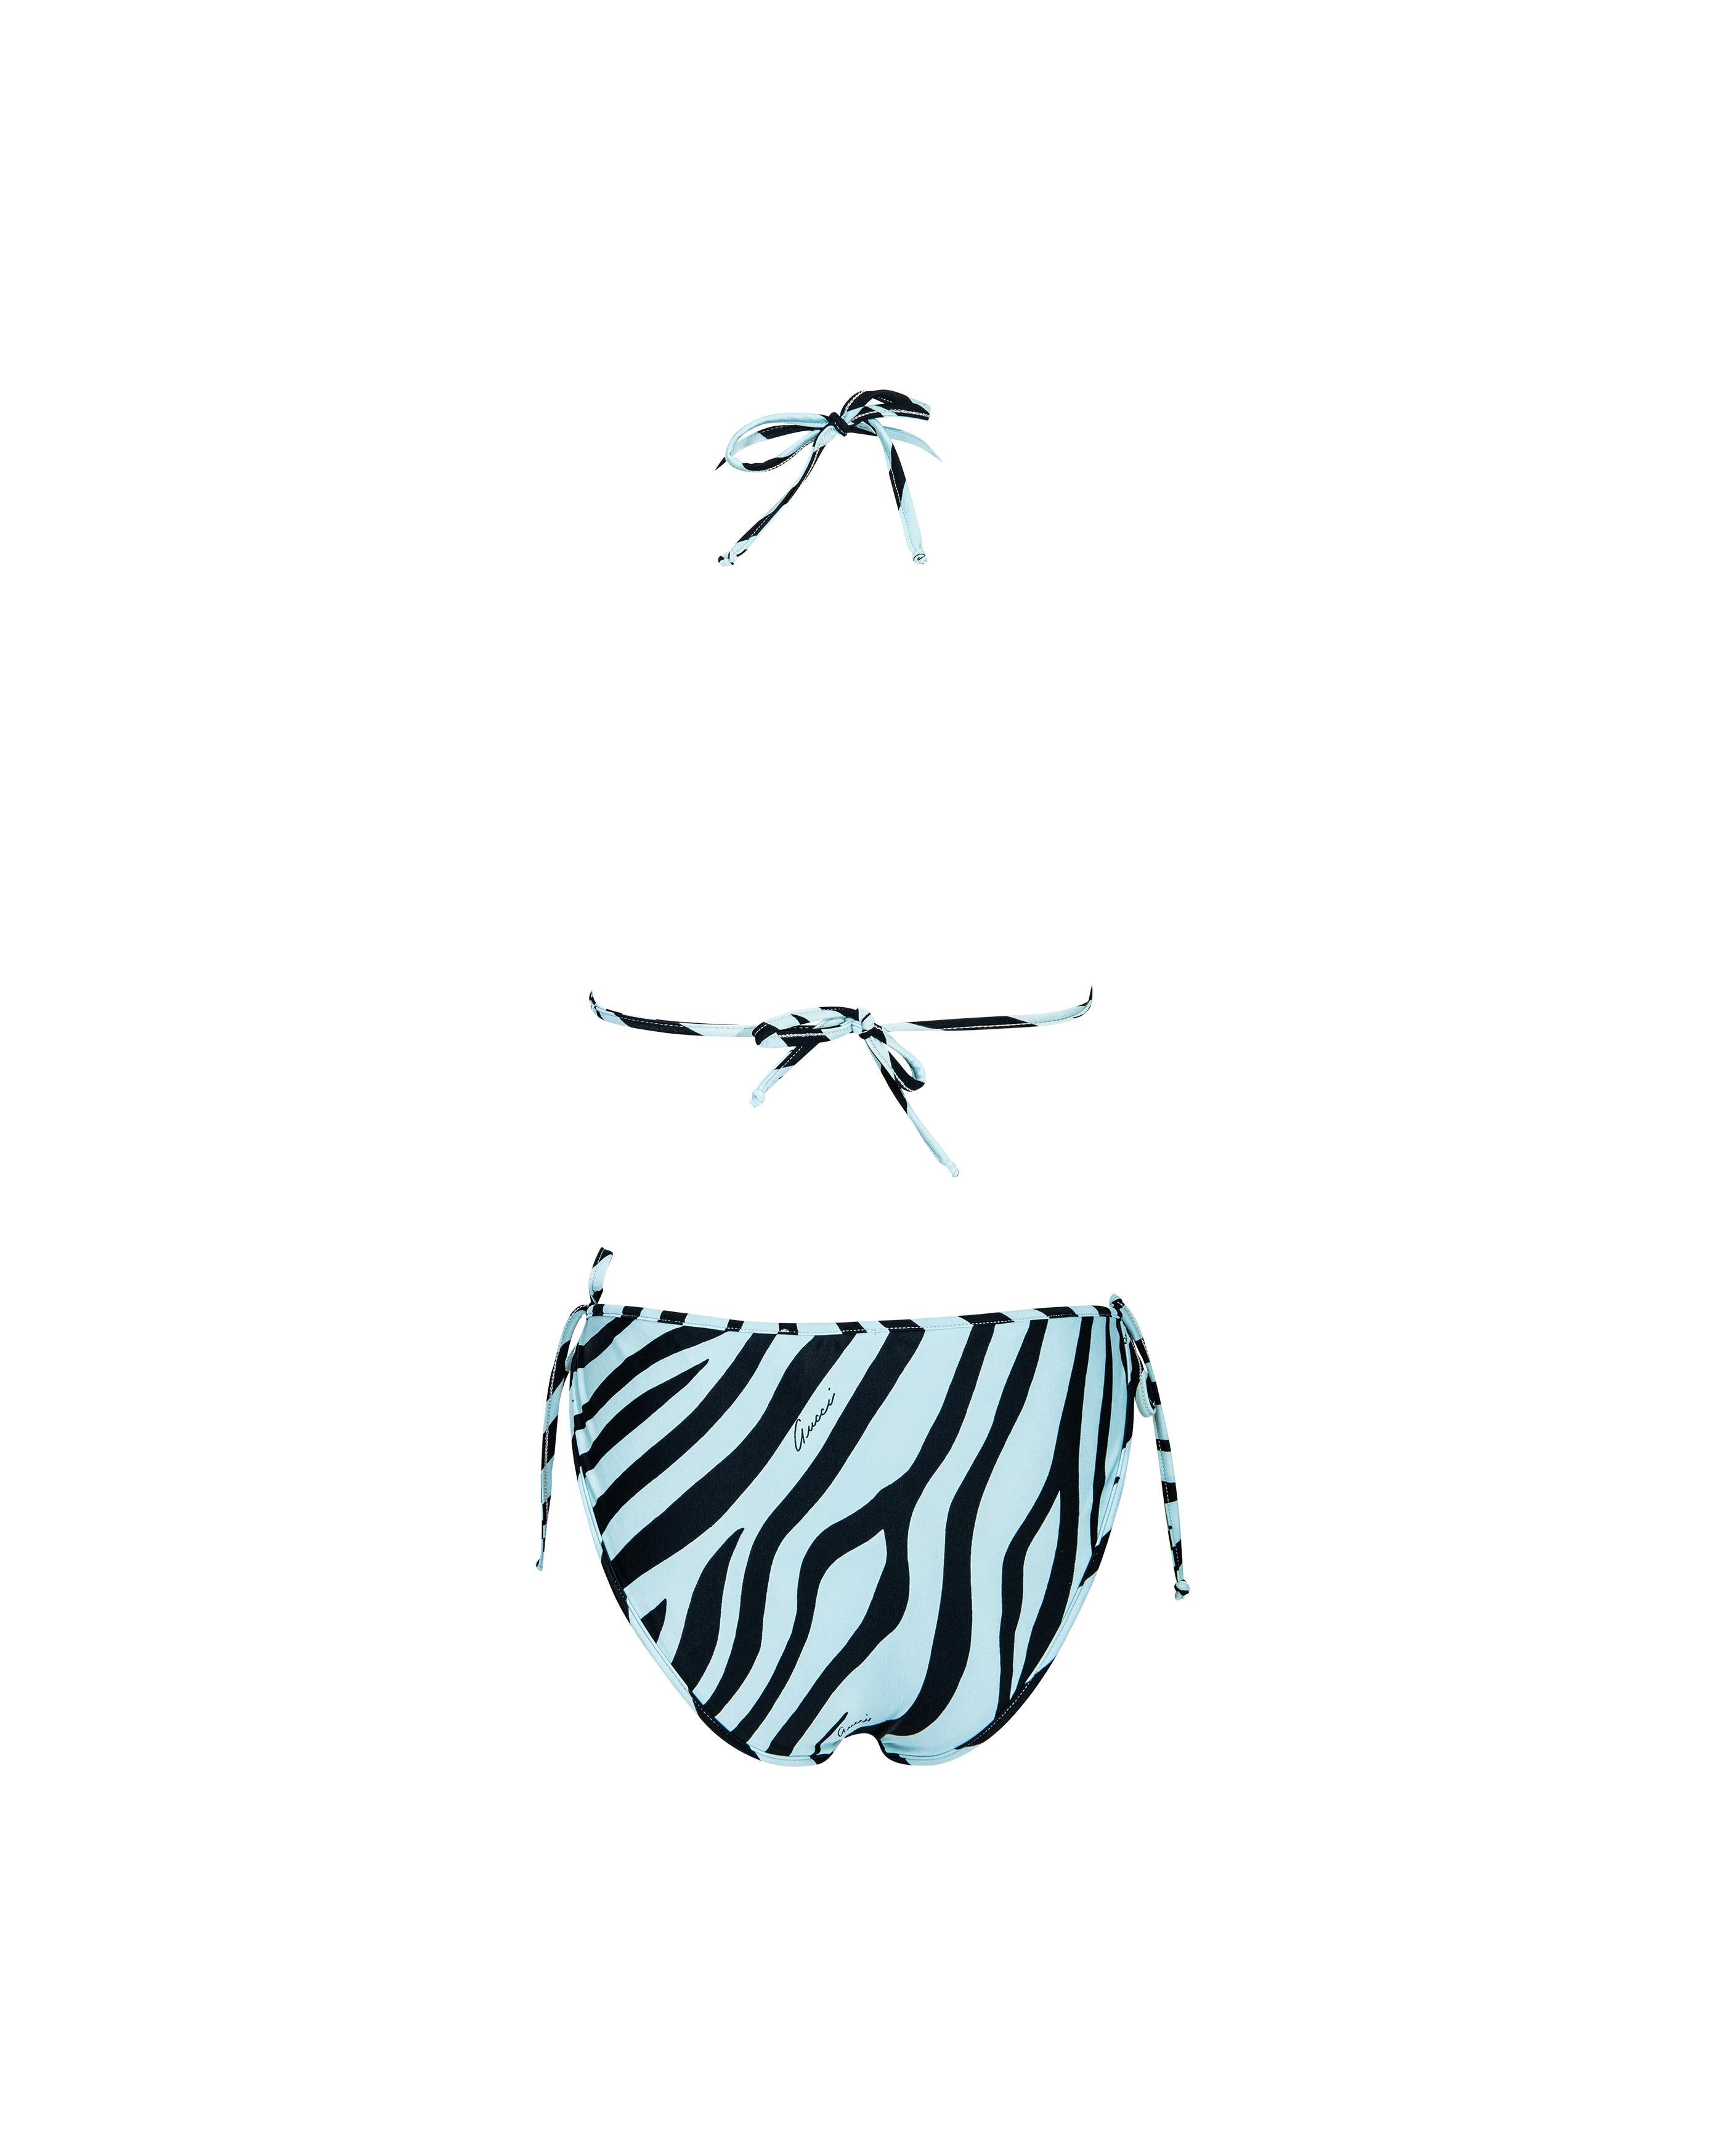 S/S 1996 Gucci by Tom Ford Blue and Black Zebra Print String Bikini 1